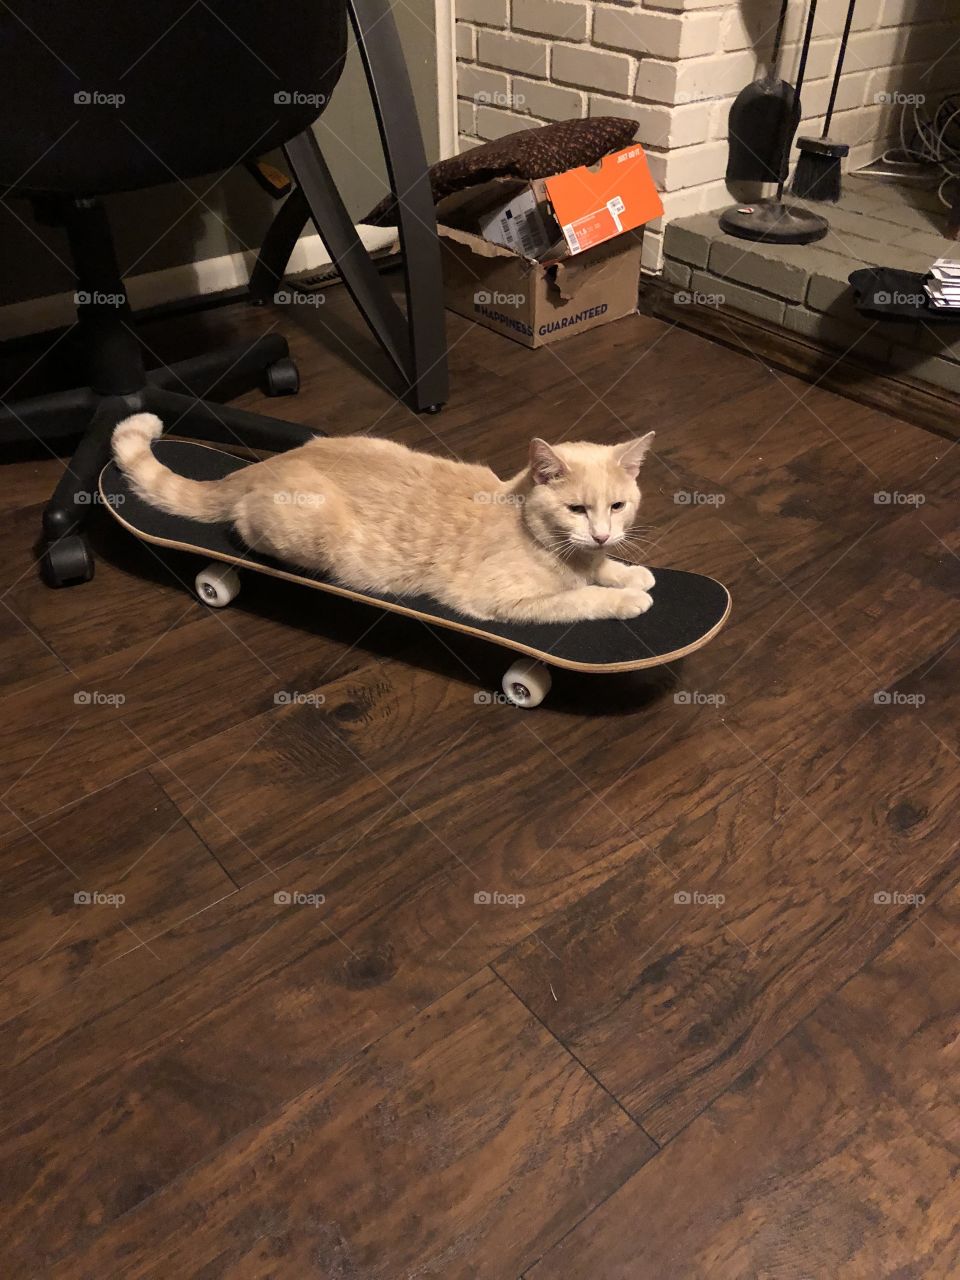 Skateboard cat